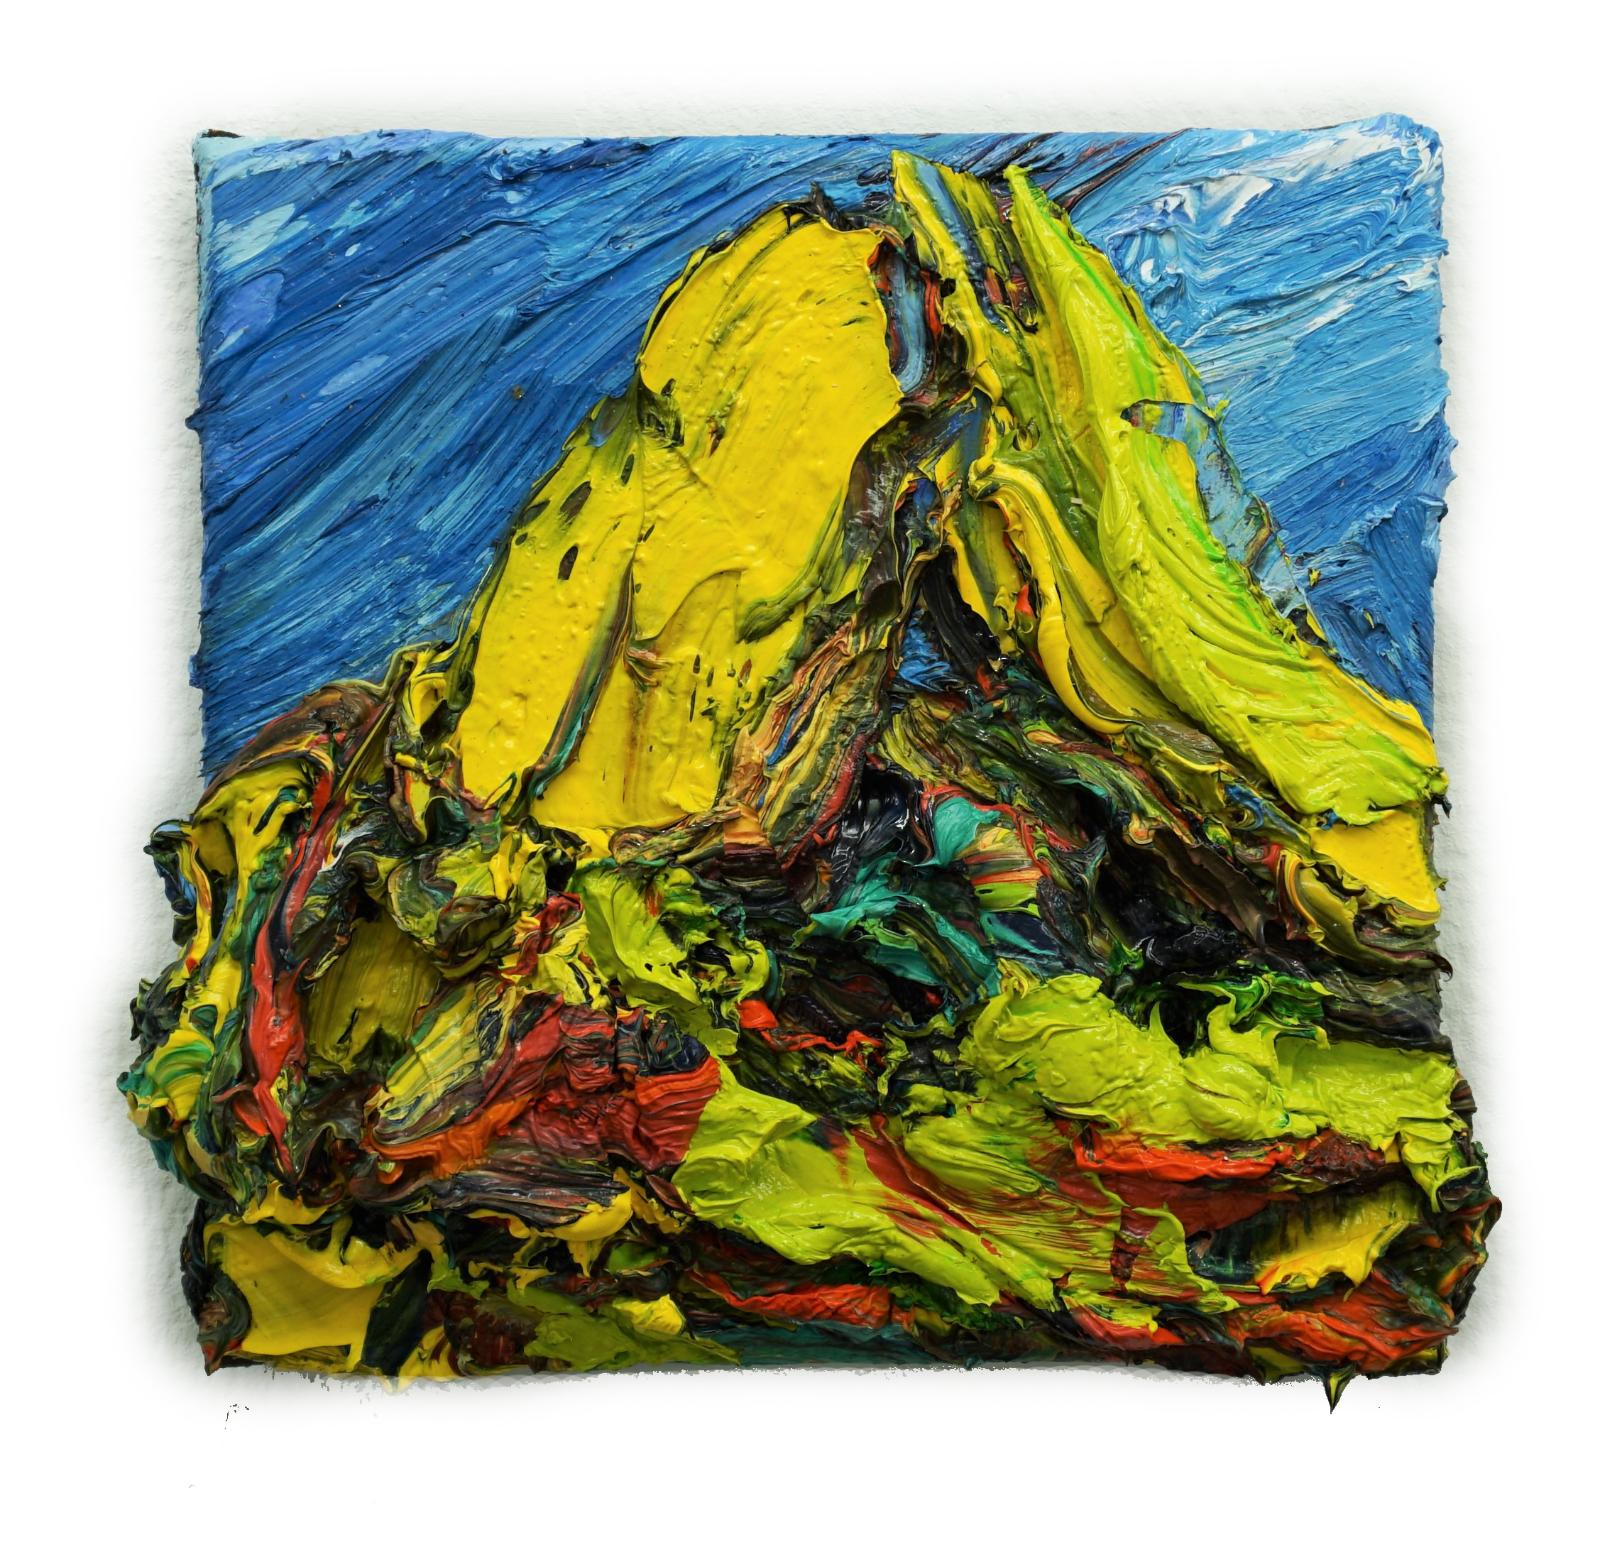 Harry Meyer, Gipfel, 2020, Öl auf Leinwand, 20 x 20 cm, meh010ko